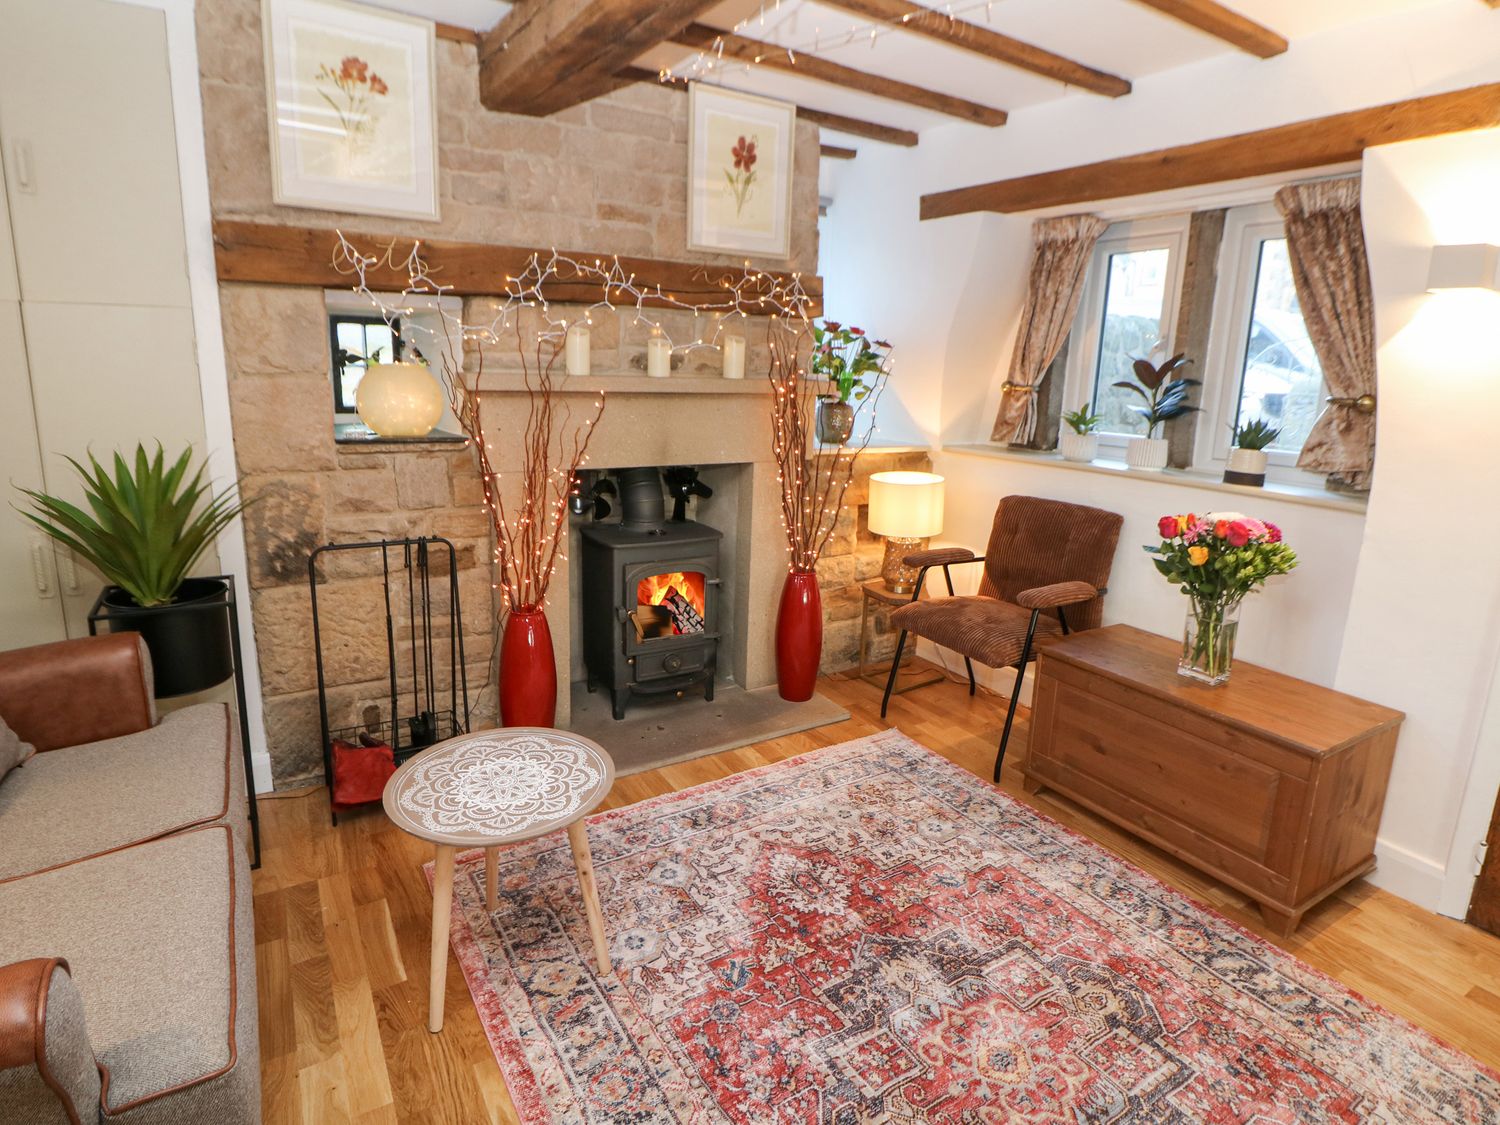 Toll Bar Cottage, Baslow, Derbyshire. Three-bedroom riverside home near amenities. Woodburning stove